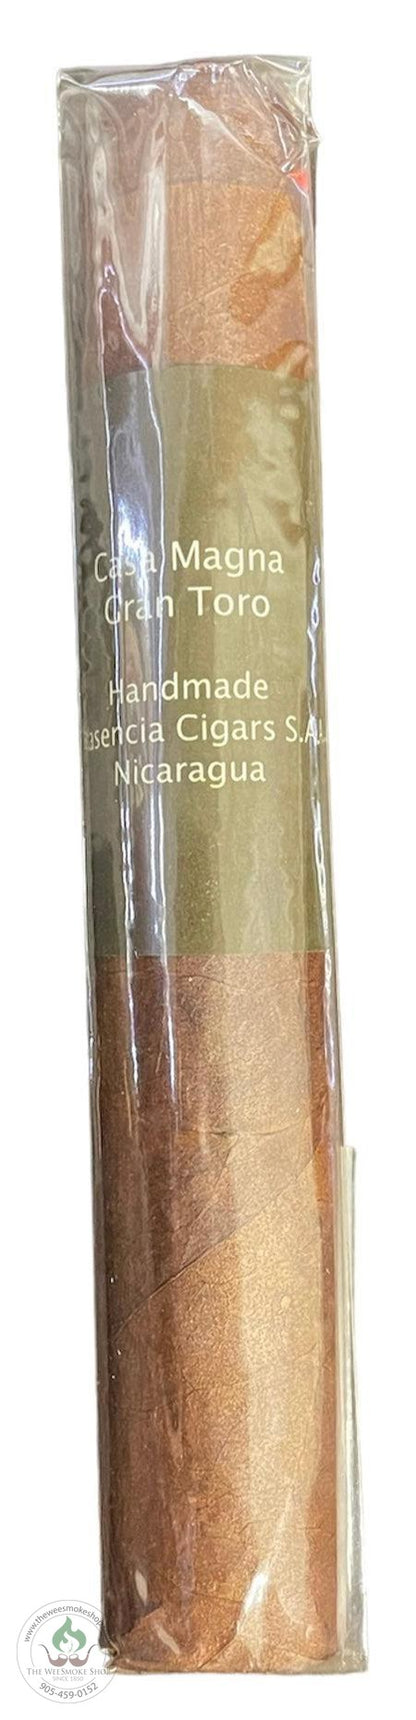 Casa Magna - Gran Toro - The Wee Smoke Shop